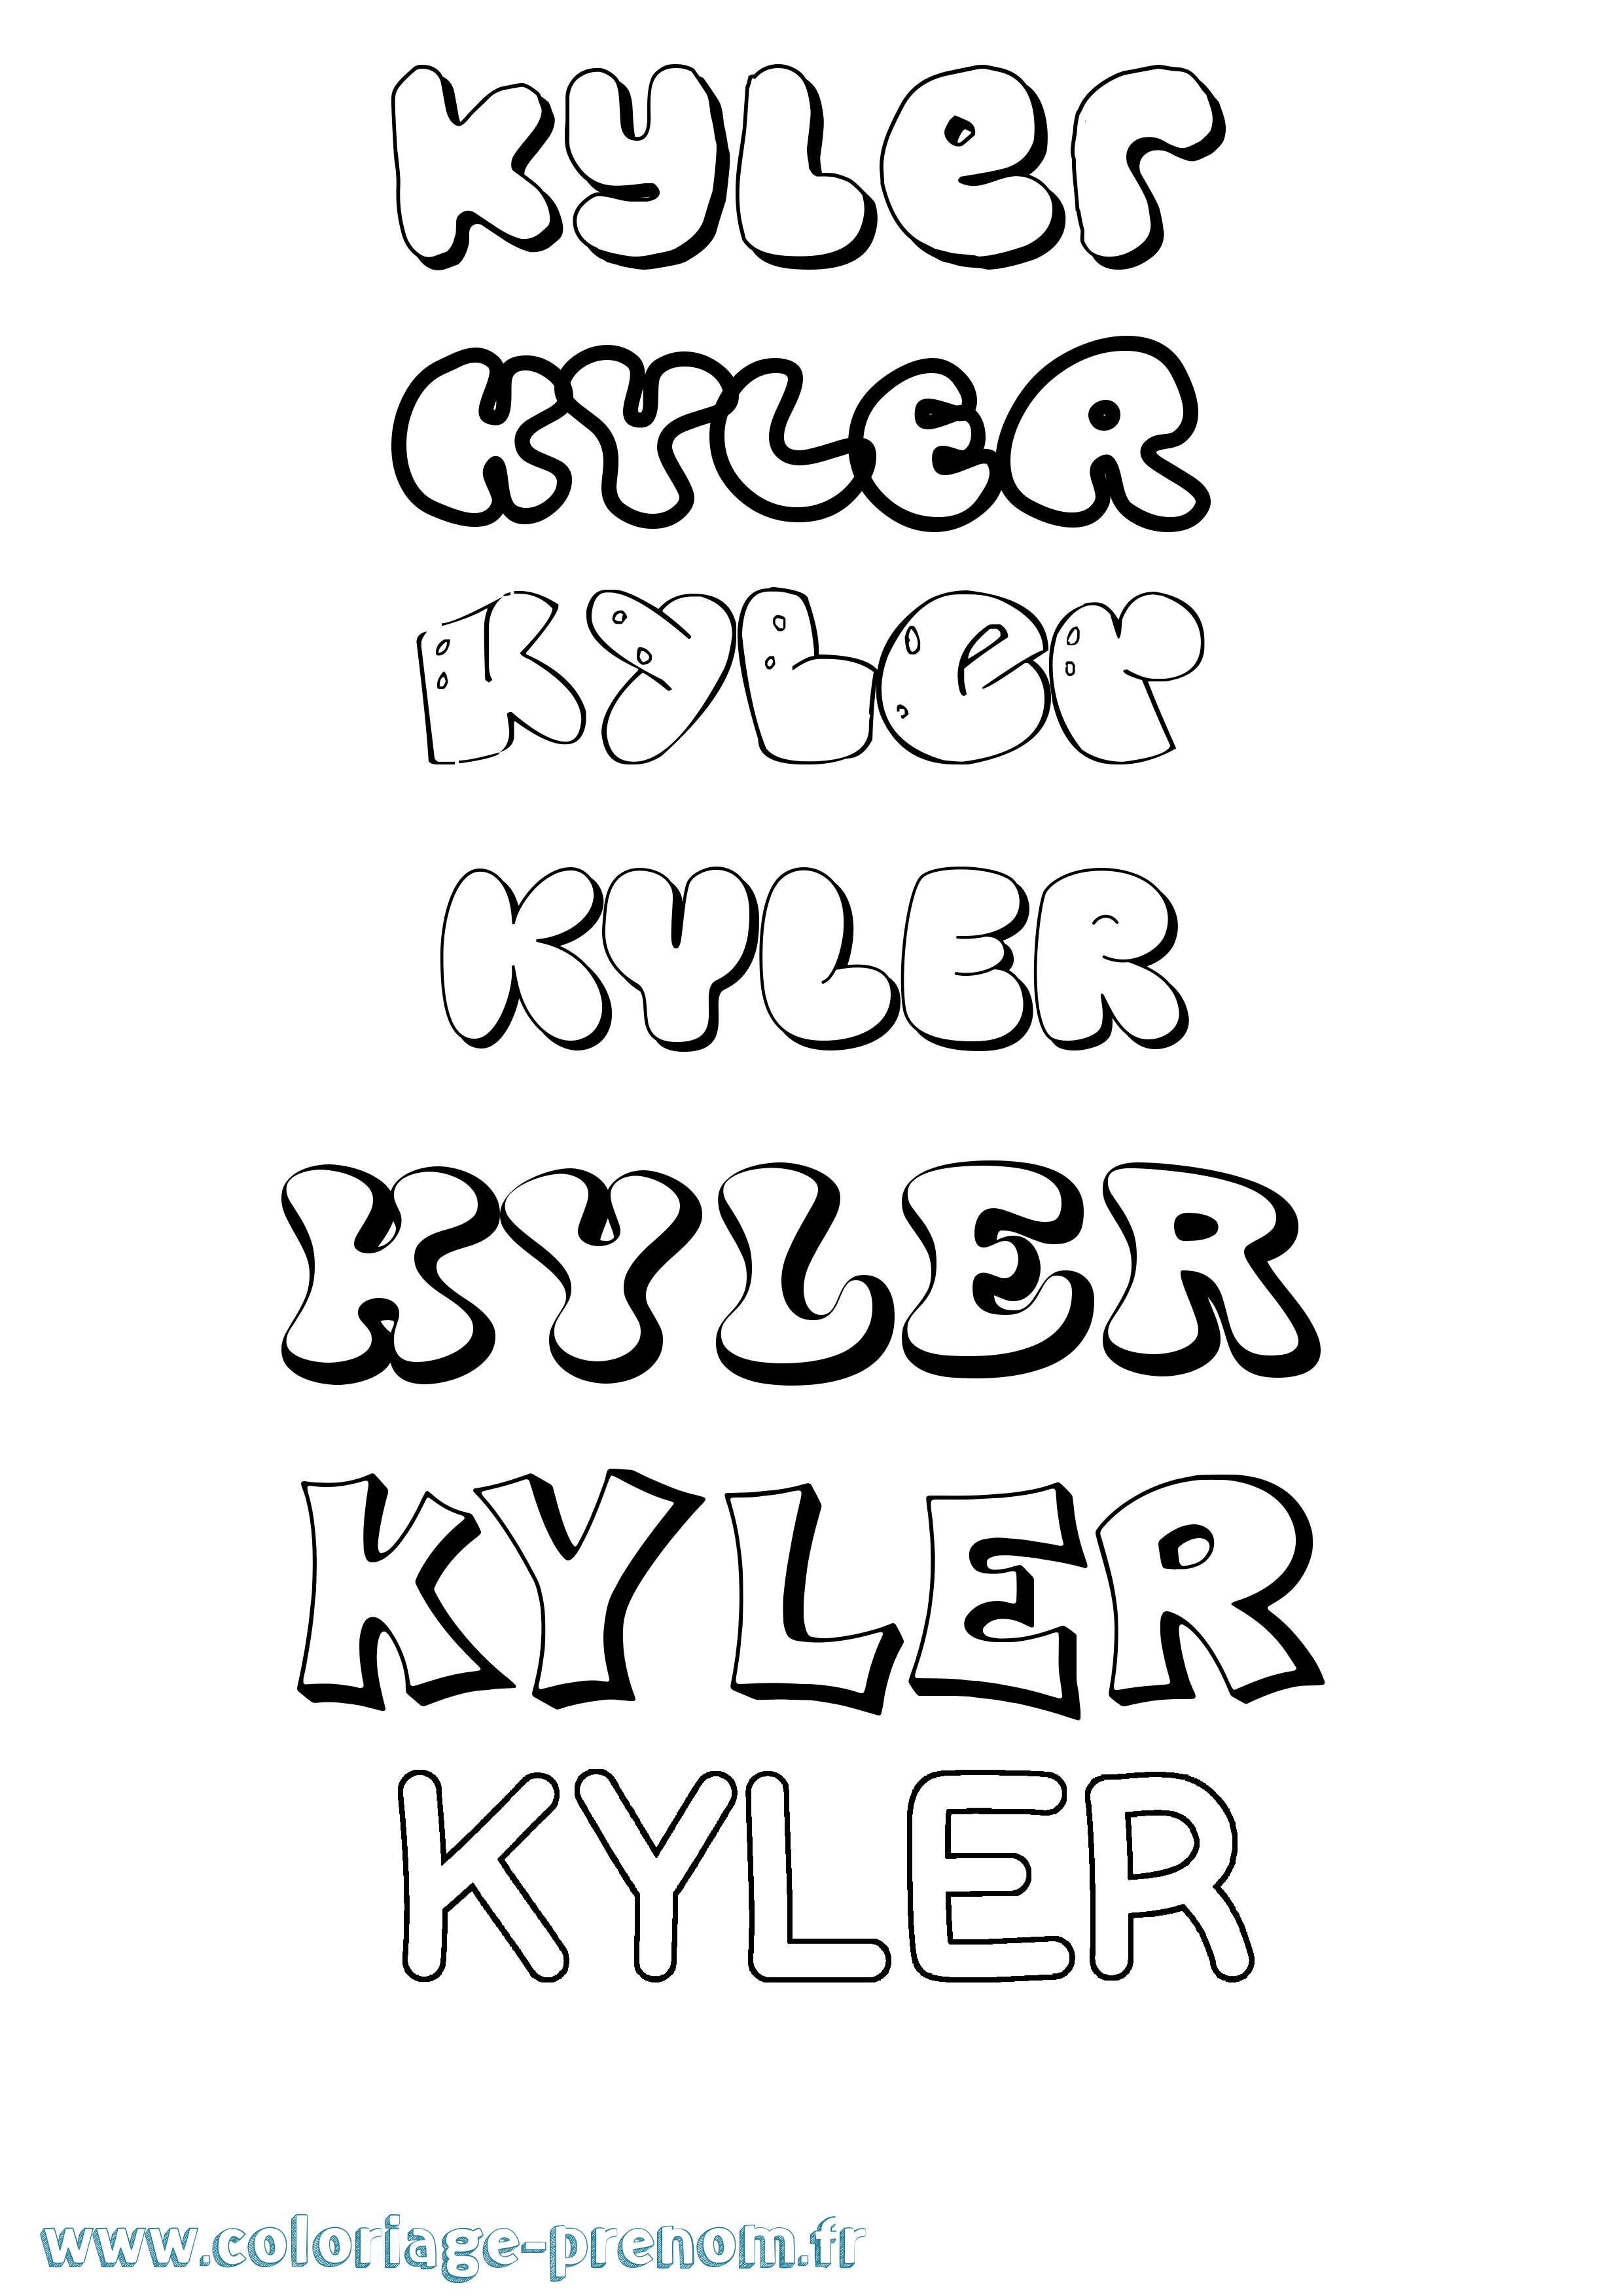 Coloriage prénom Kyler Bubble